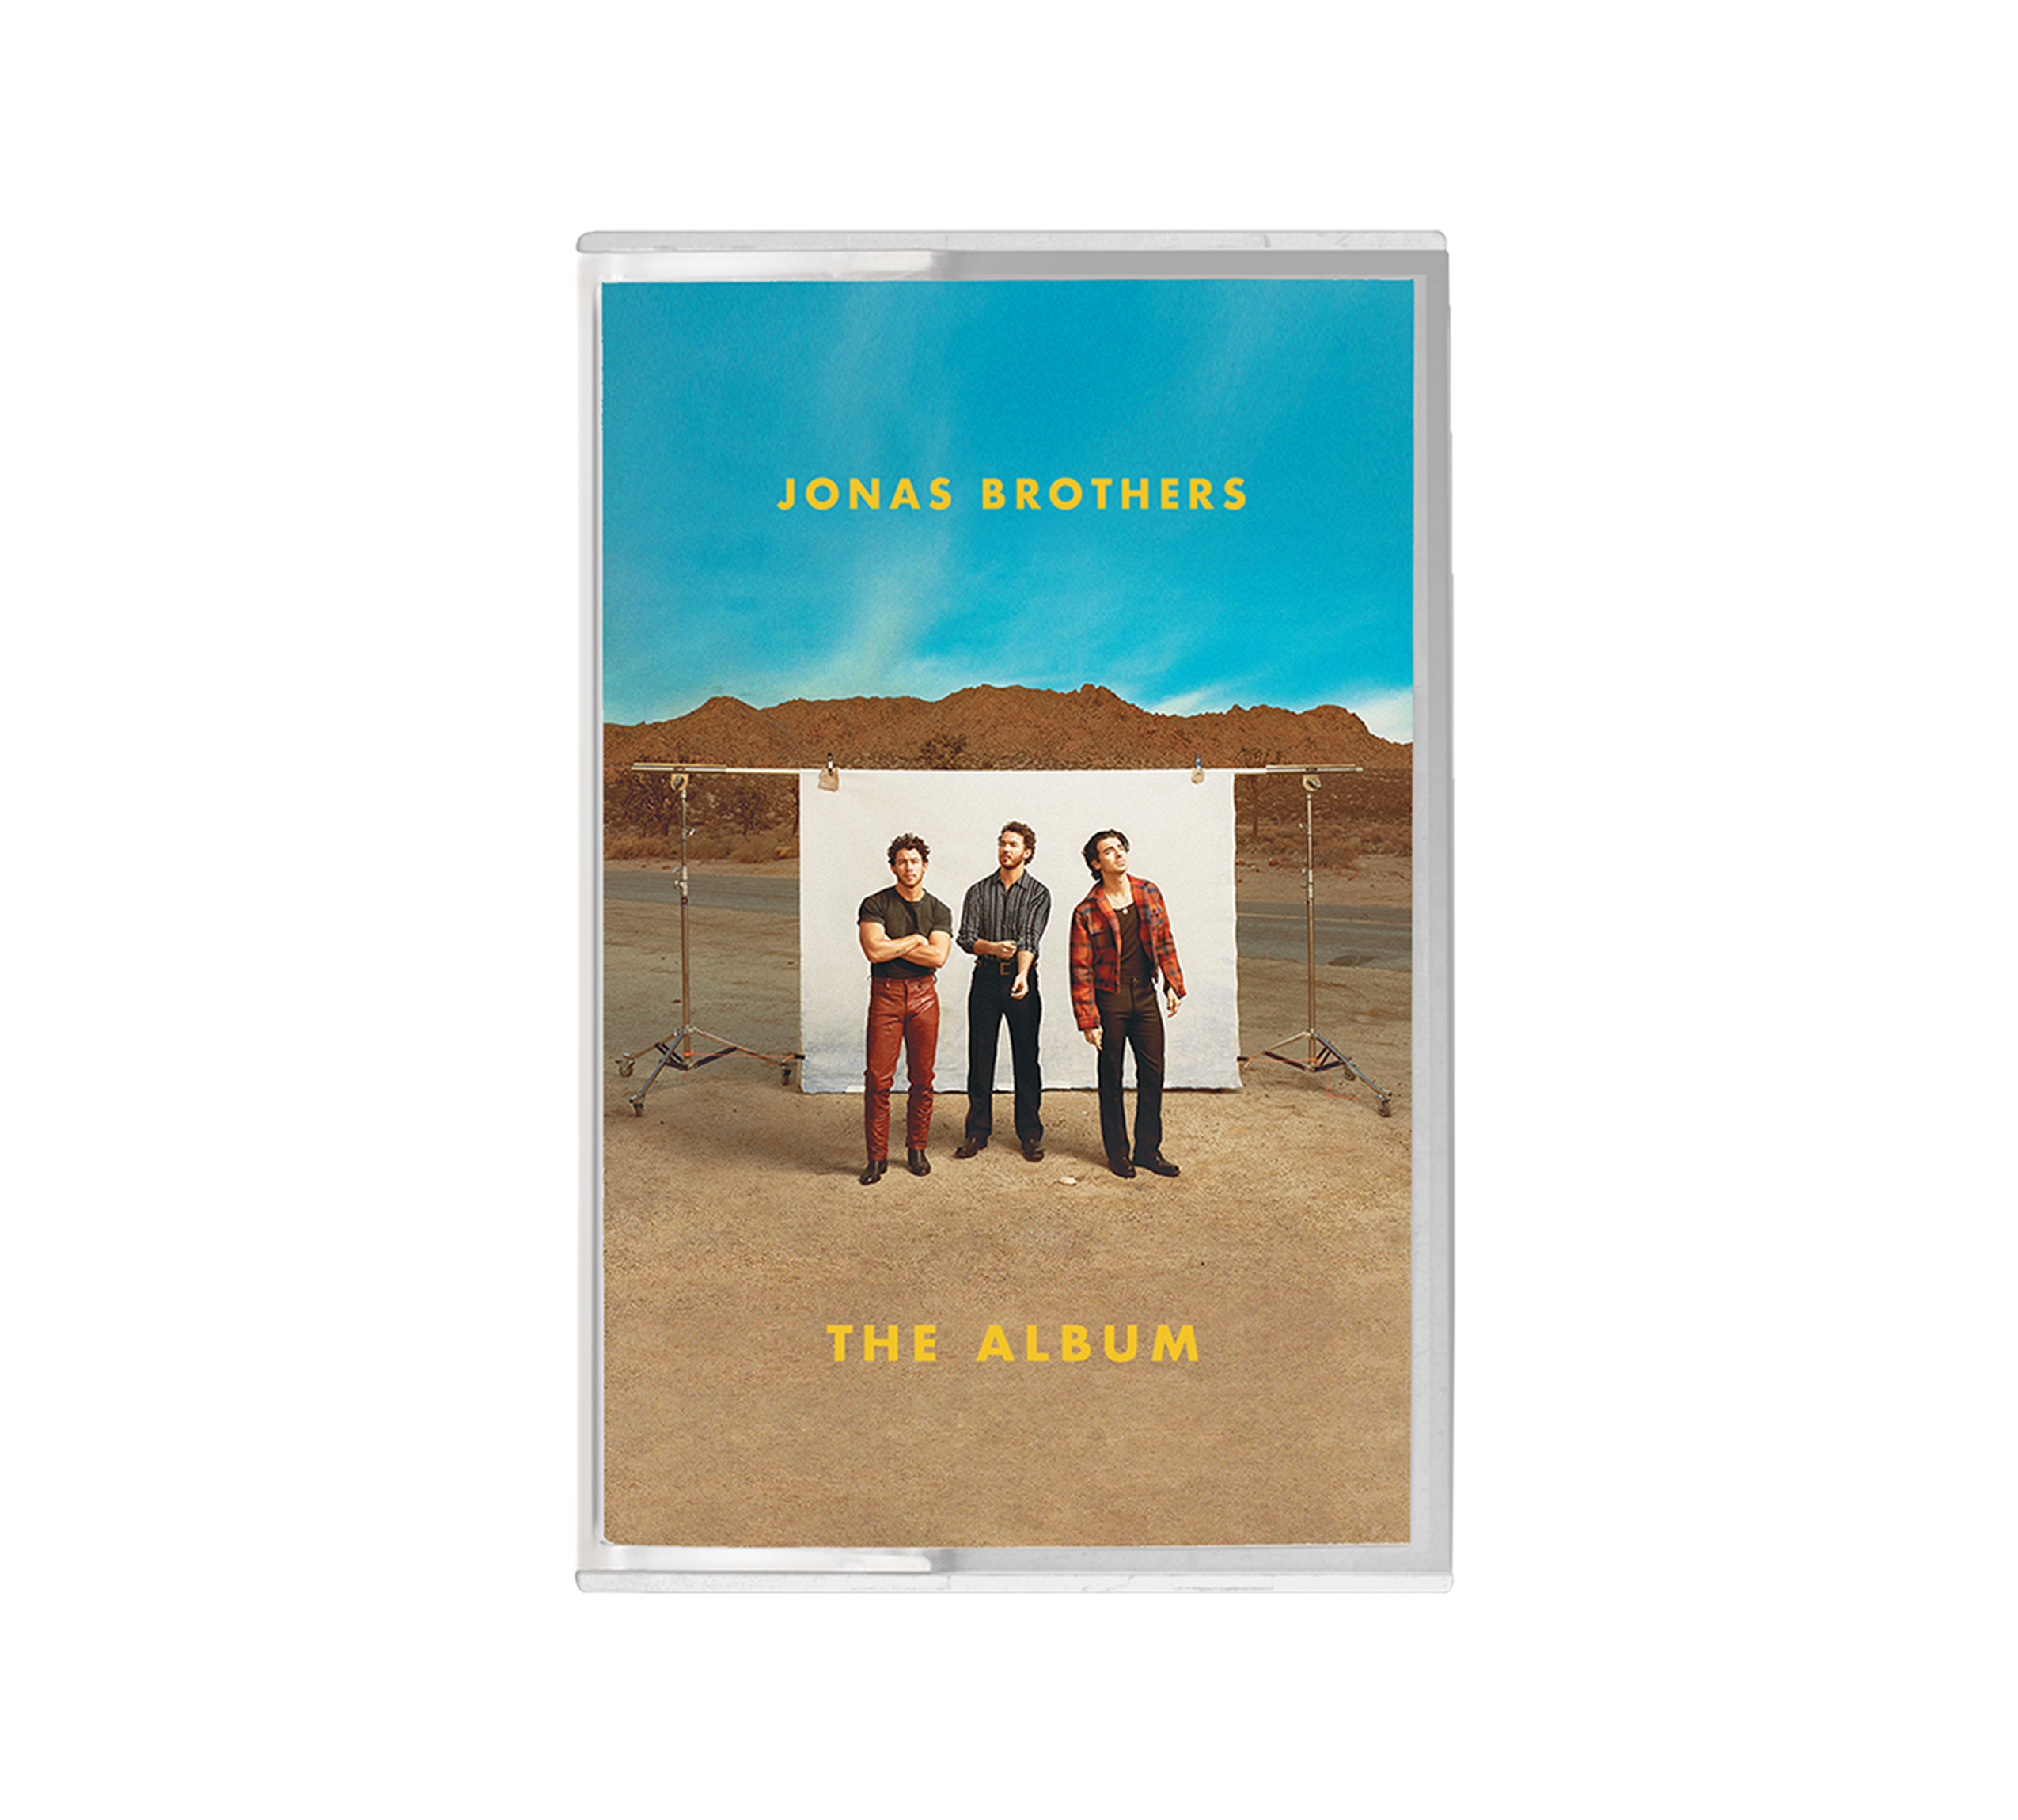 Jonas Brothers - The Album Cassette